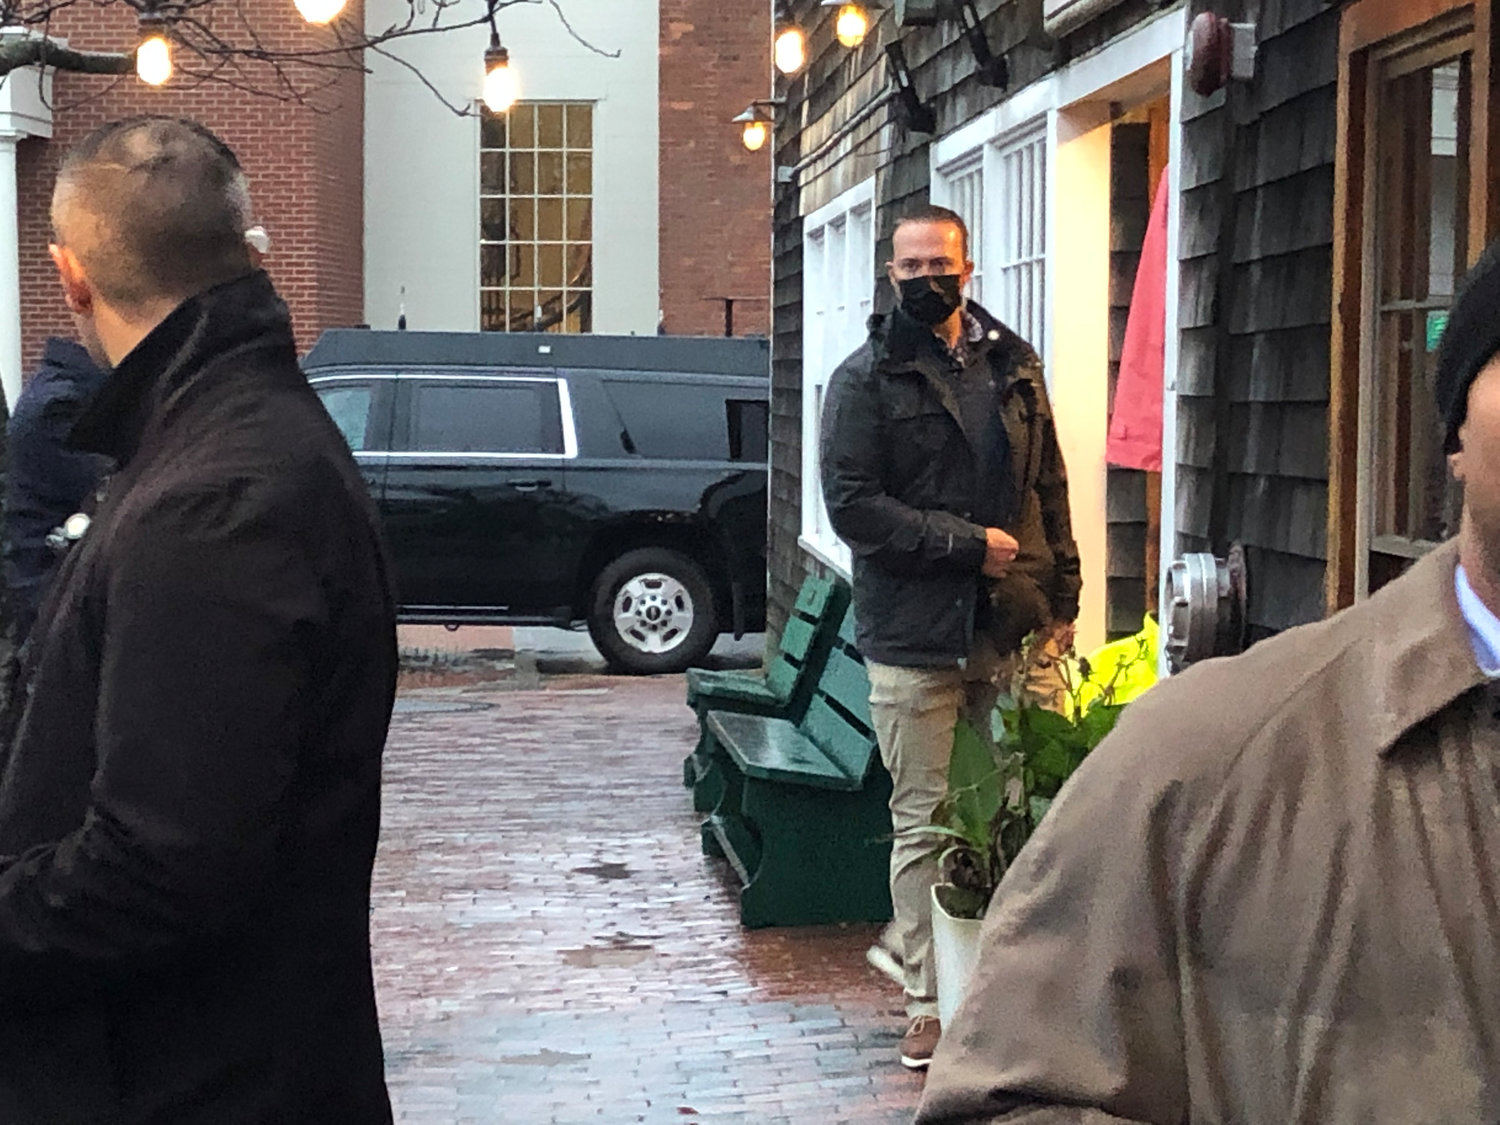 Secret Service outside The Sunken Ship on South Water Street, while President Joe Biden shopped inside.